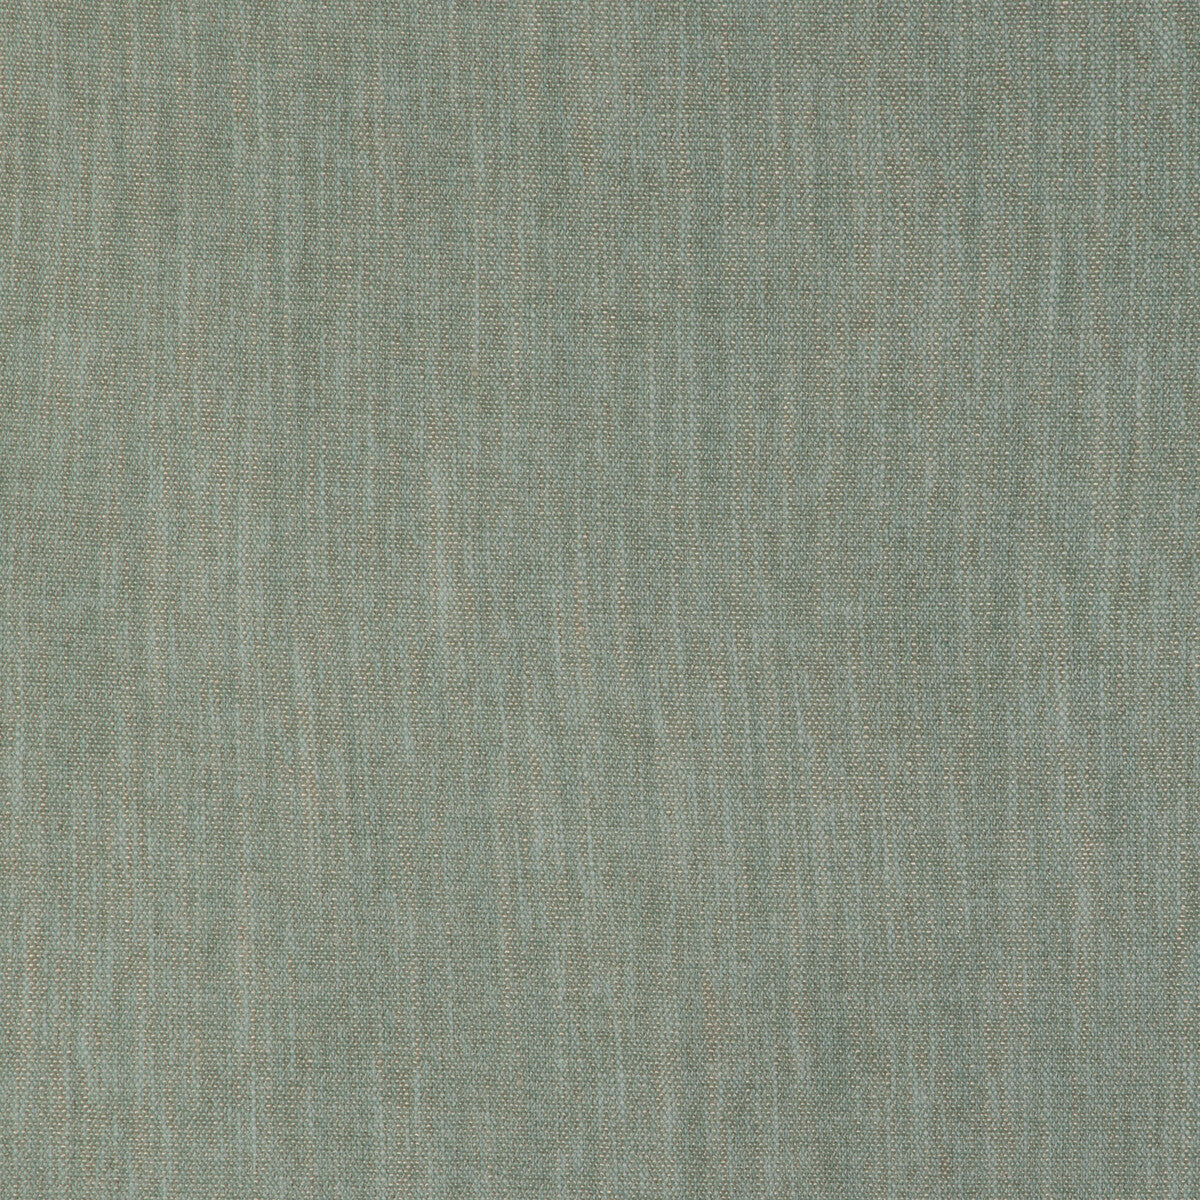 Kravet Smart fabric in 36998-354 color - pattern 36998.354.0 - by Kravet Smart